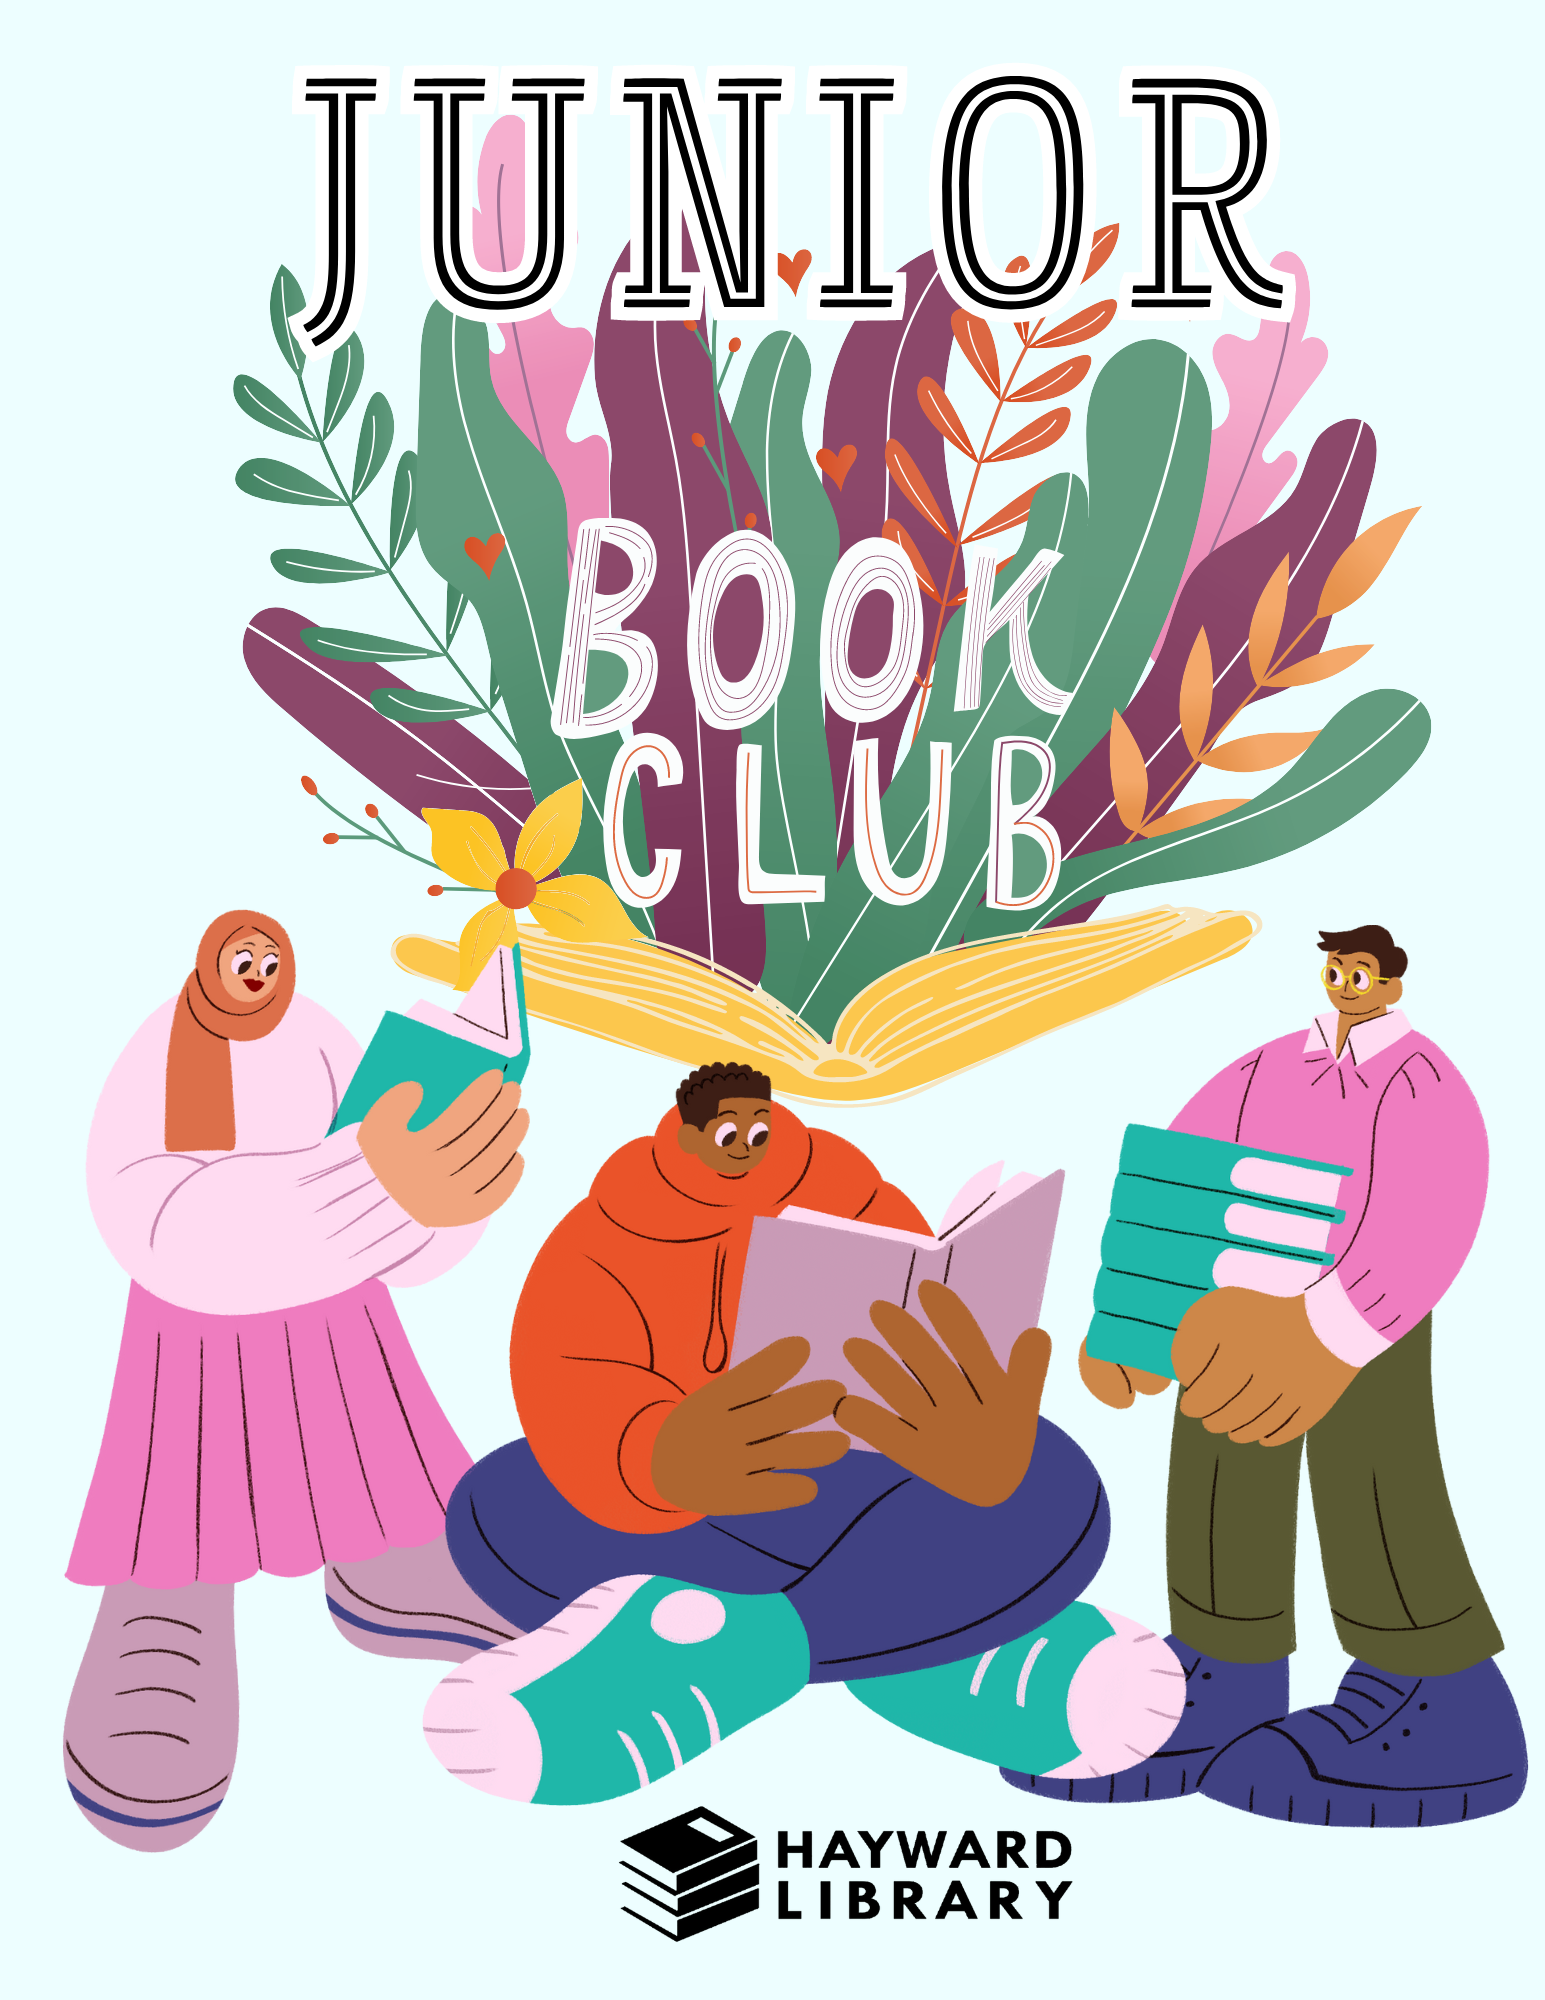 Logo image of cartoon children gathered around reading